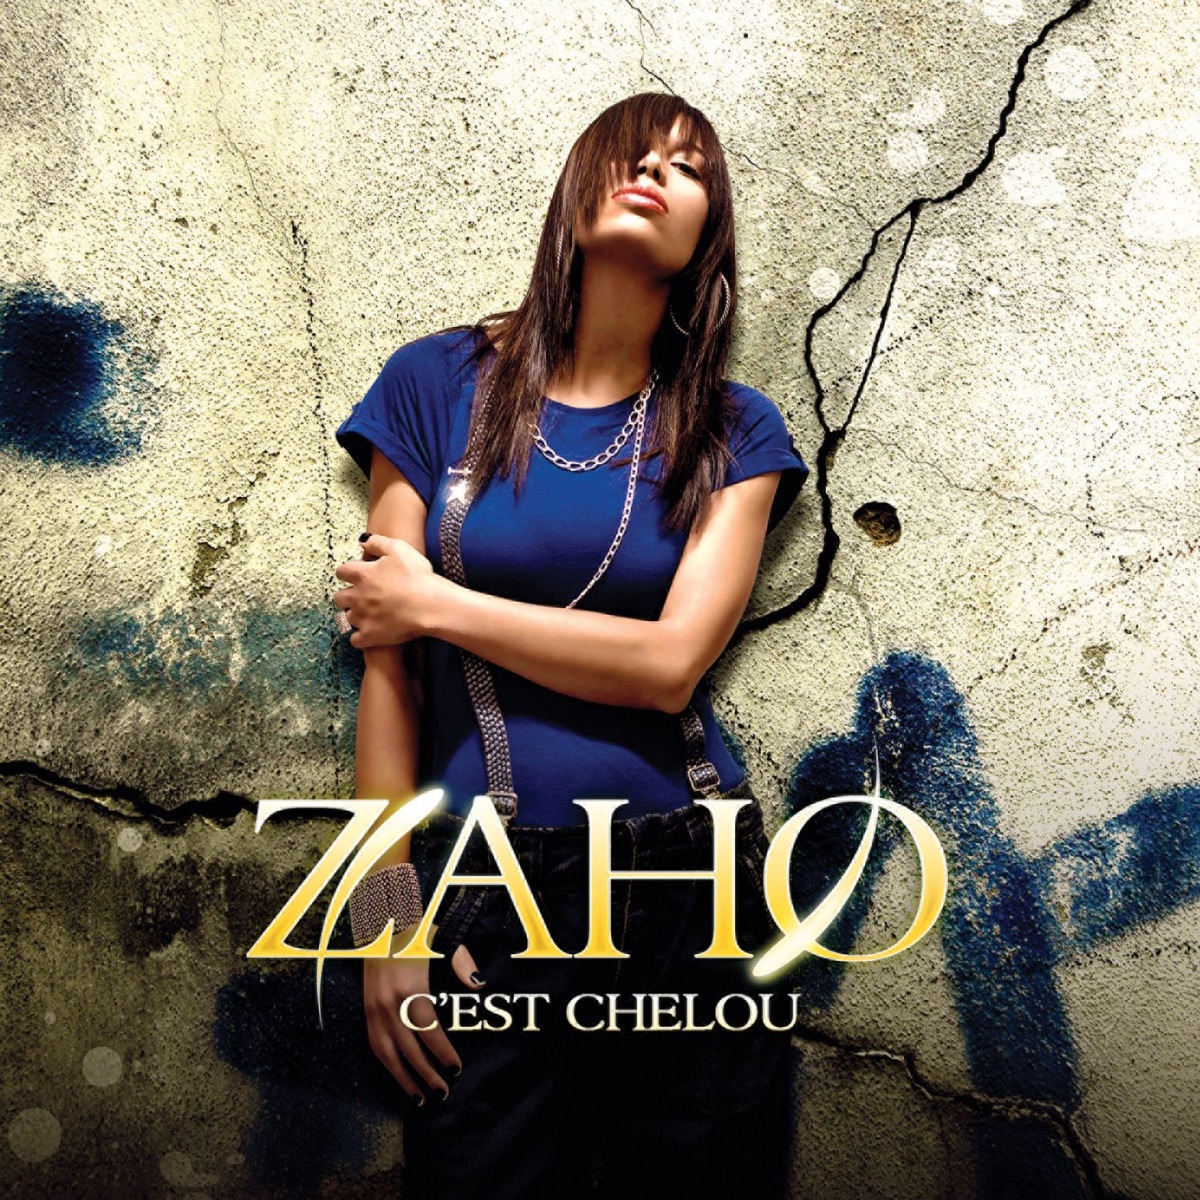 Laissez-les kouma (feat. MHD) - Single by Zaho on Apple Music